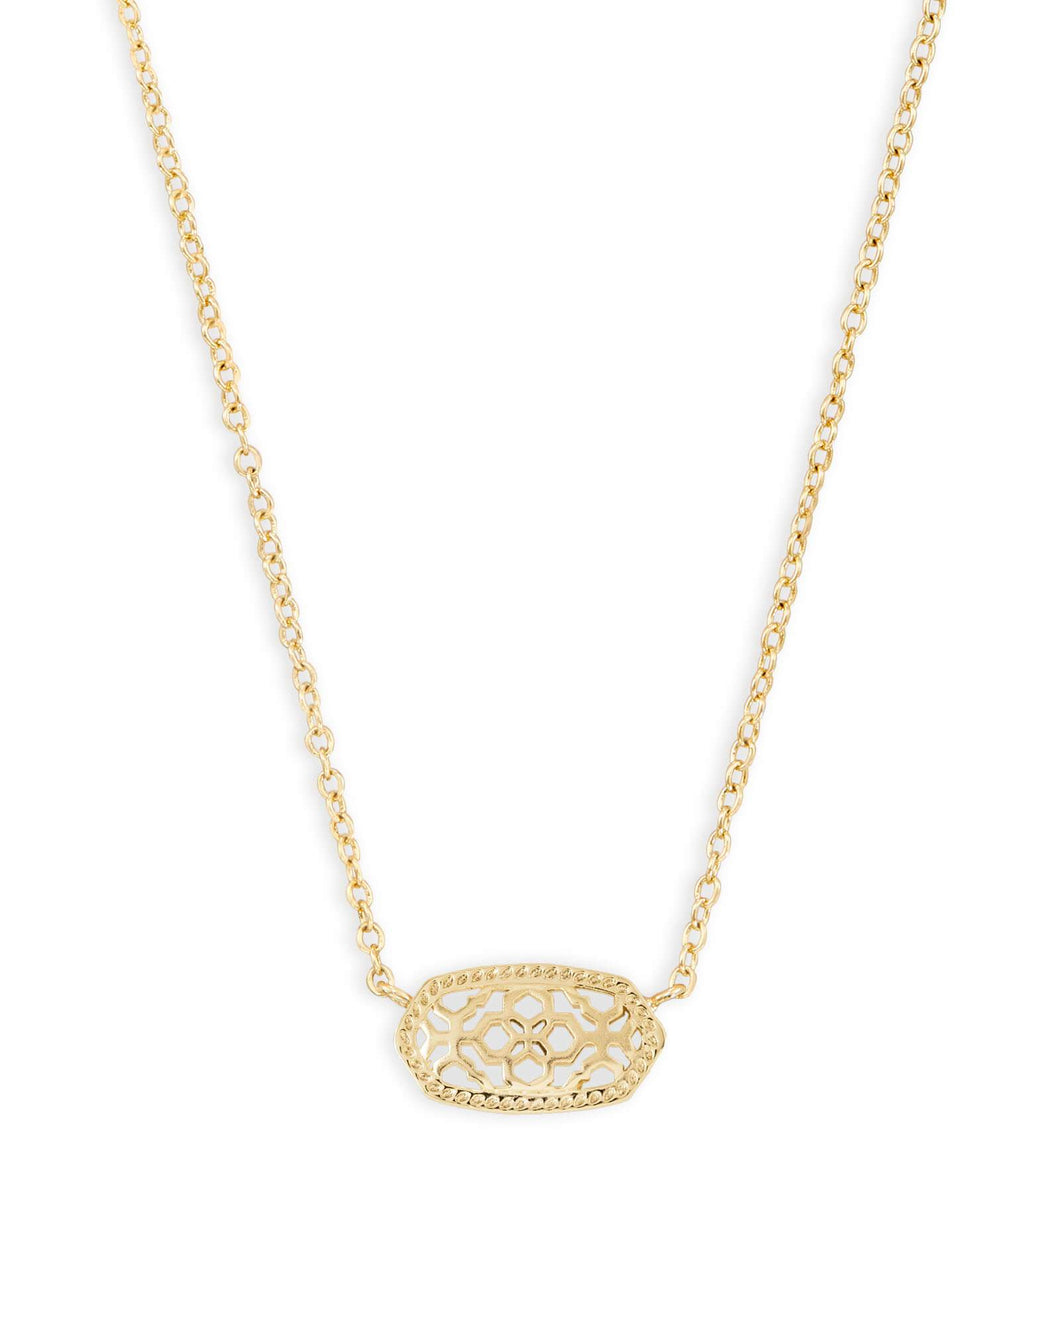 Kendra Scott Elisa Gold Pendant Necklace in Filigree